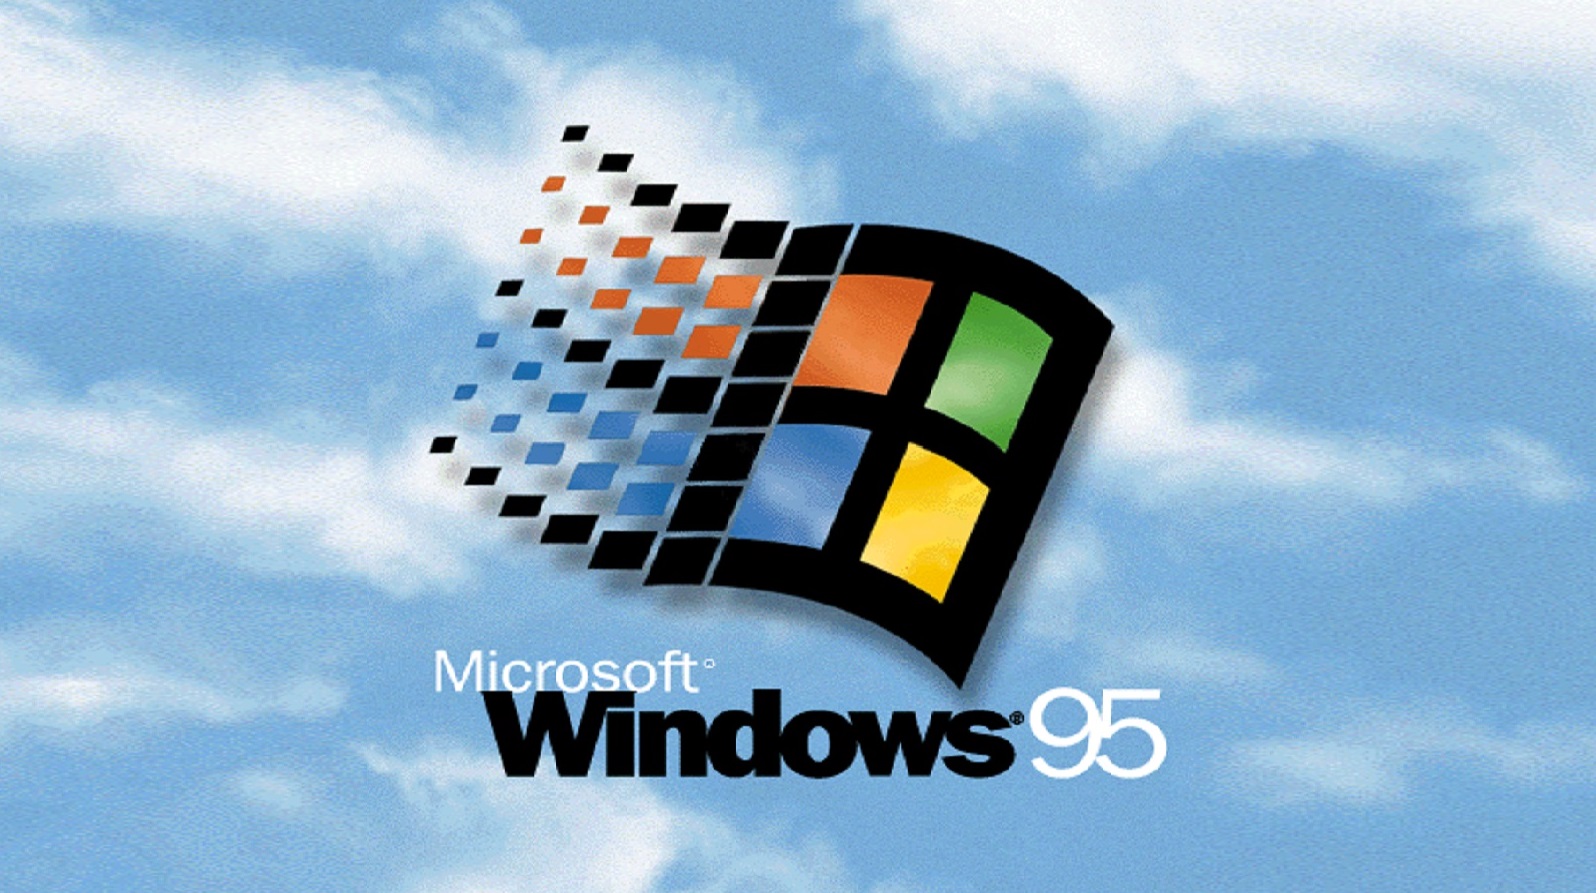 windows 95 wallpaper,logo,sky,font,graphics,technology